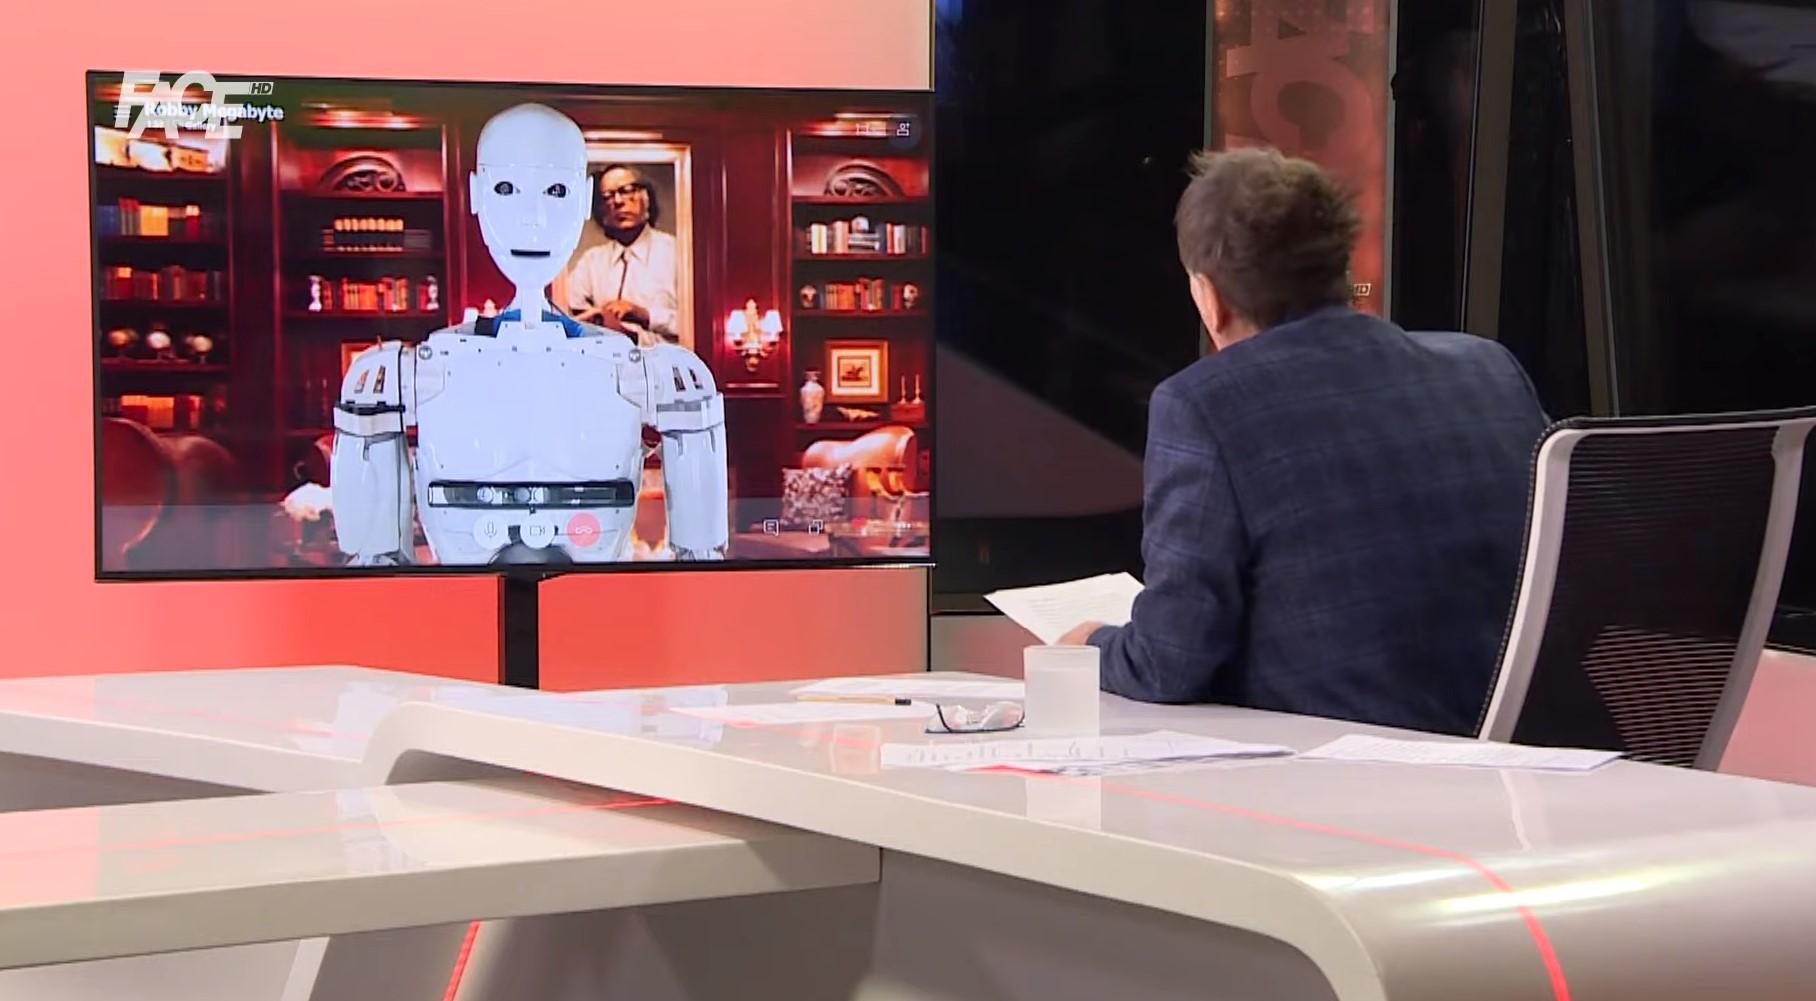 Robot Robi: Želio bih i ja postati ravnopravan građanin ove zemlje - Avaz